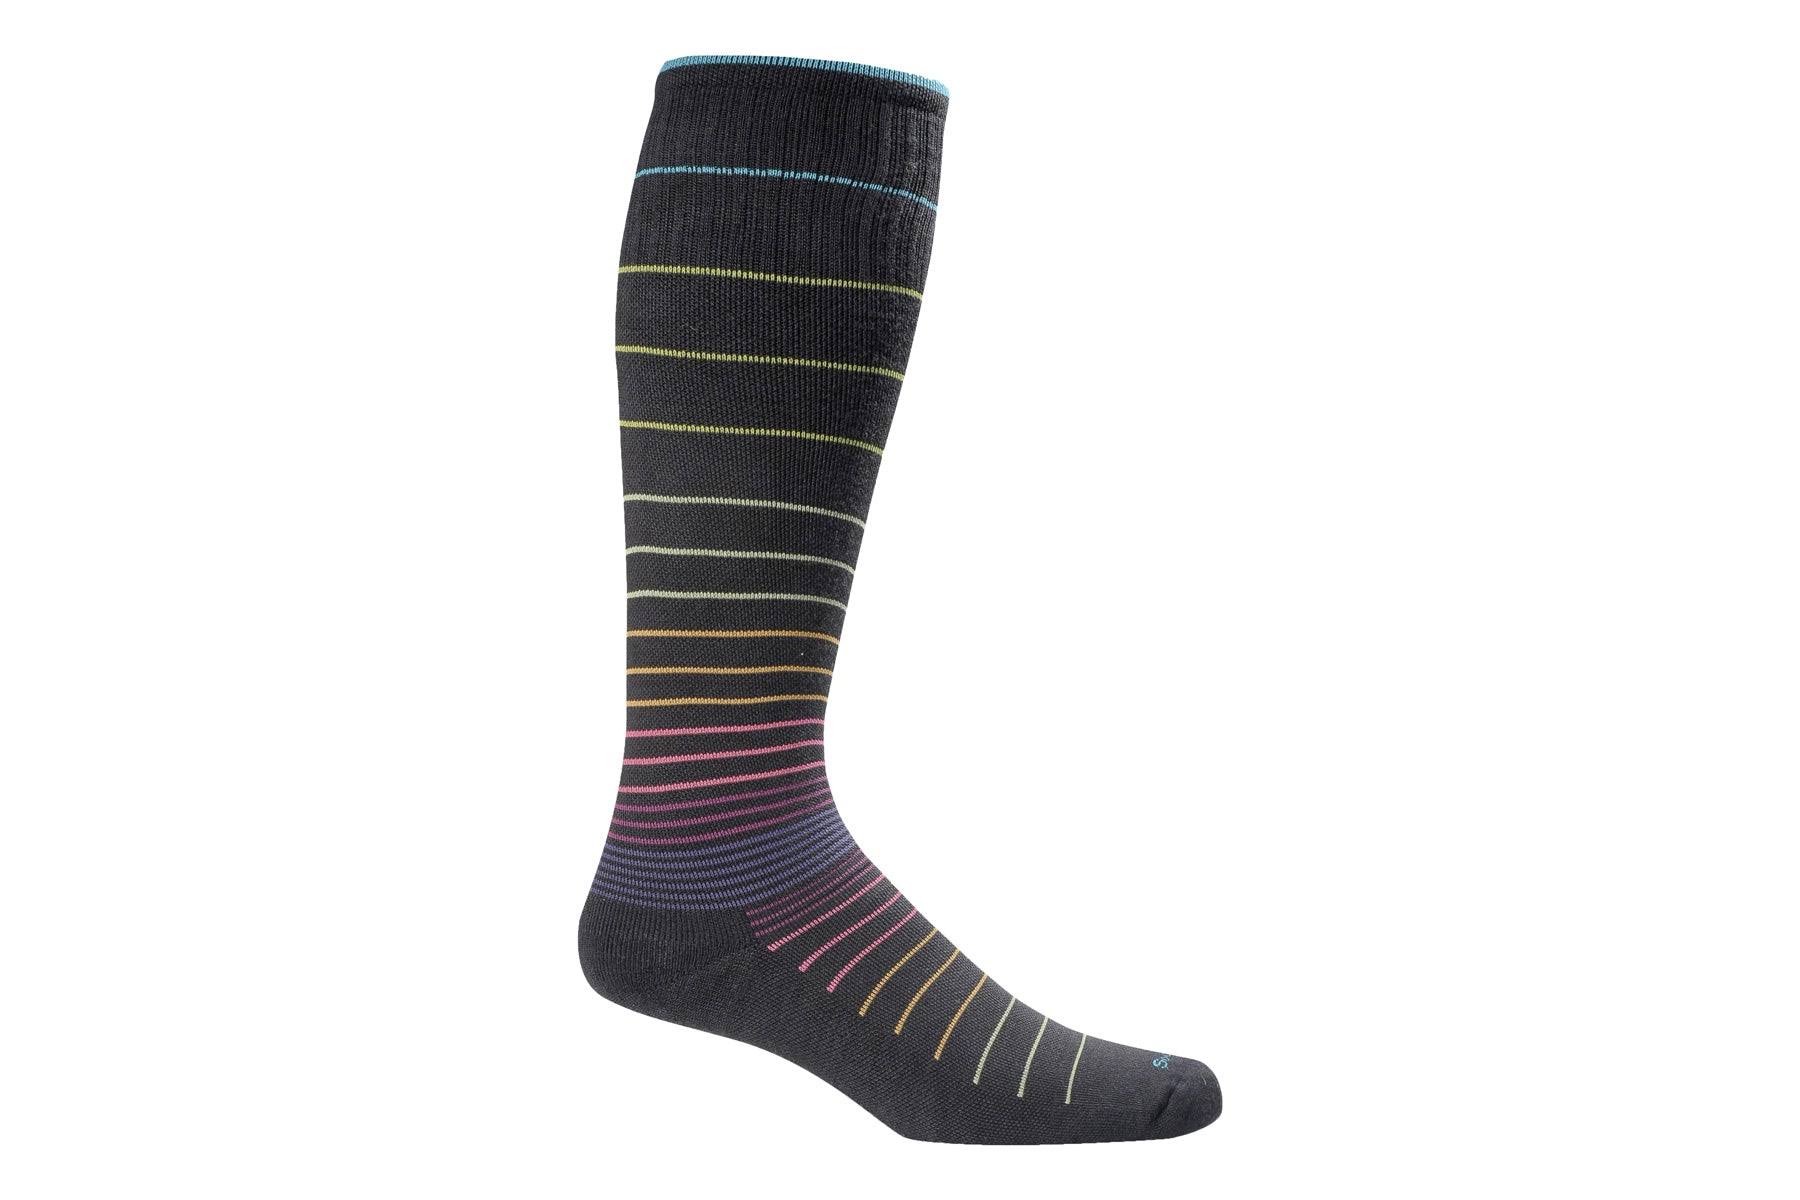 Sockwell Men's Circulator Compression Socks - Medium to Large, Black Stripe